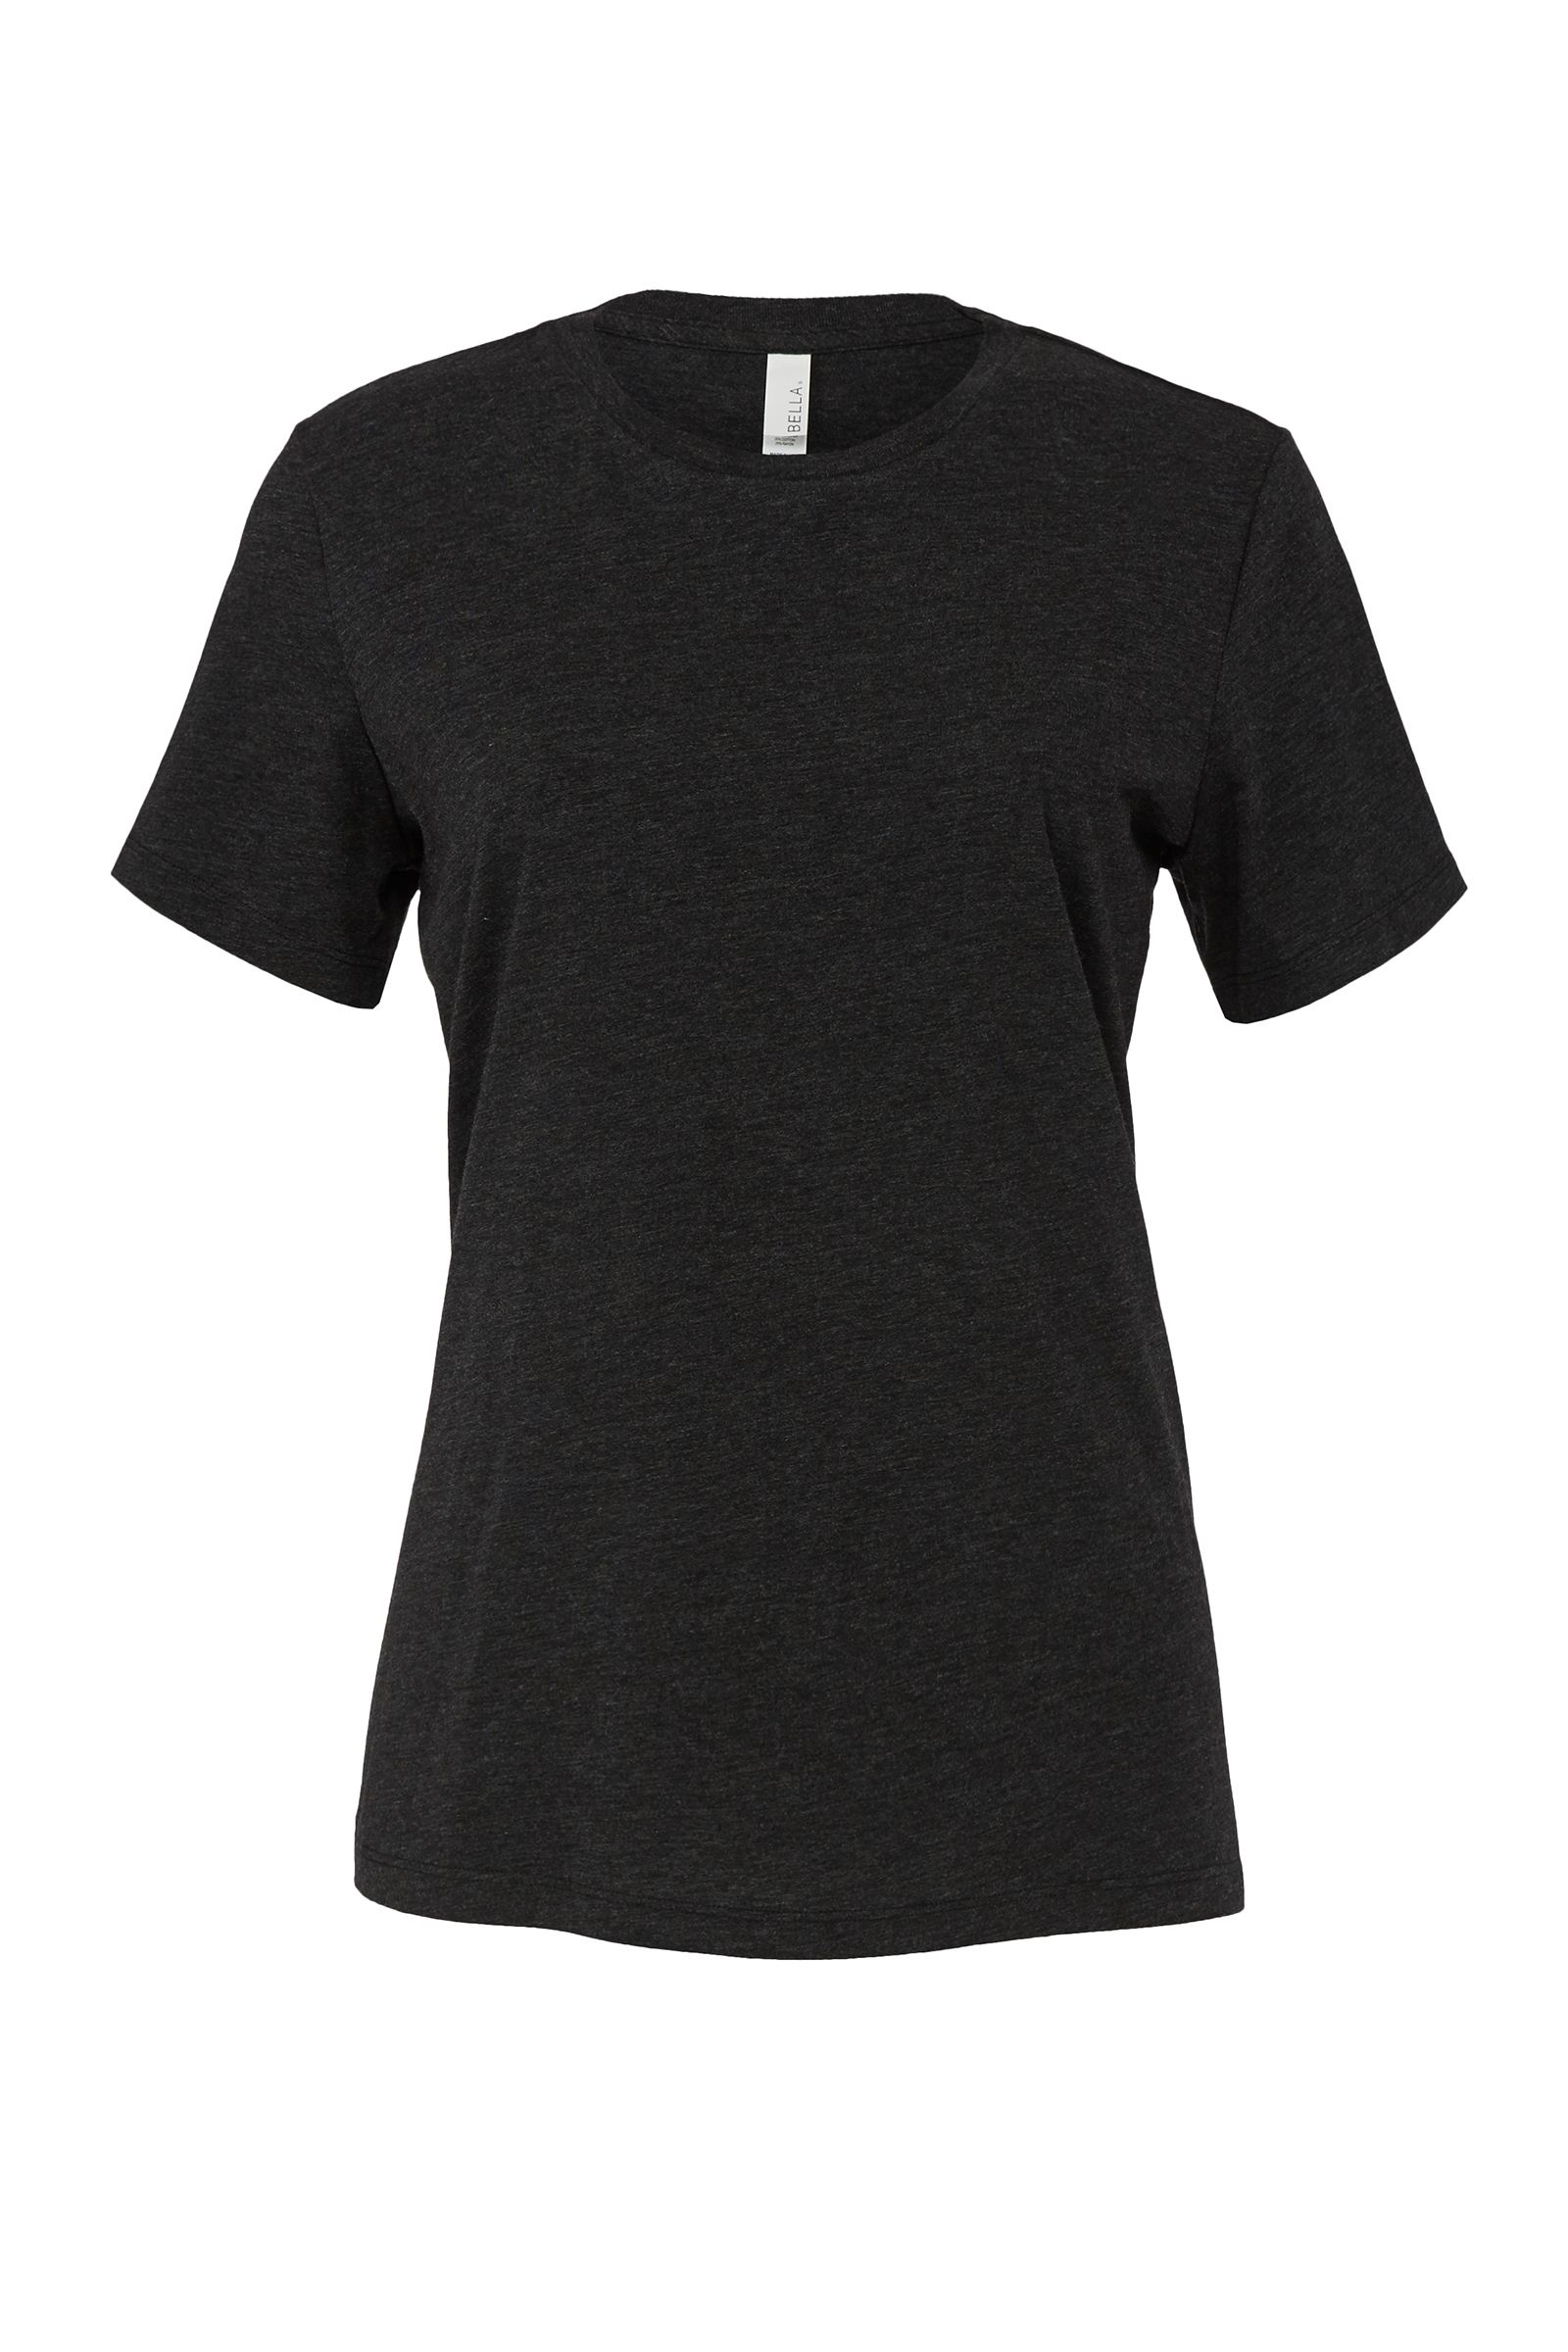 Bella+Canvas Missy's Relaxed Jersey Short‑Sleeve T‑Shirt - Team Shirt Pros